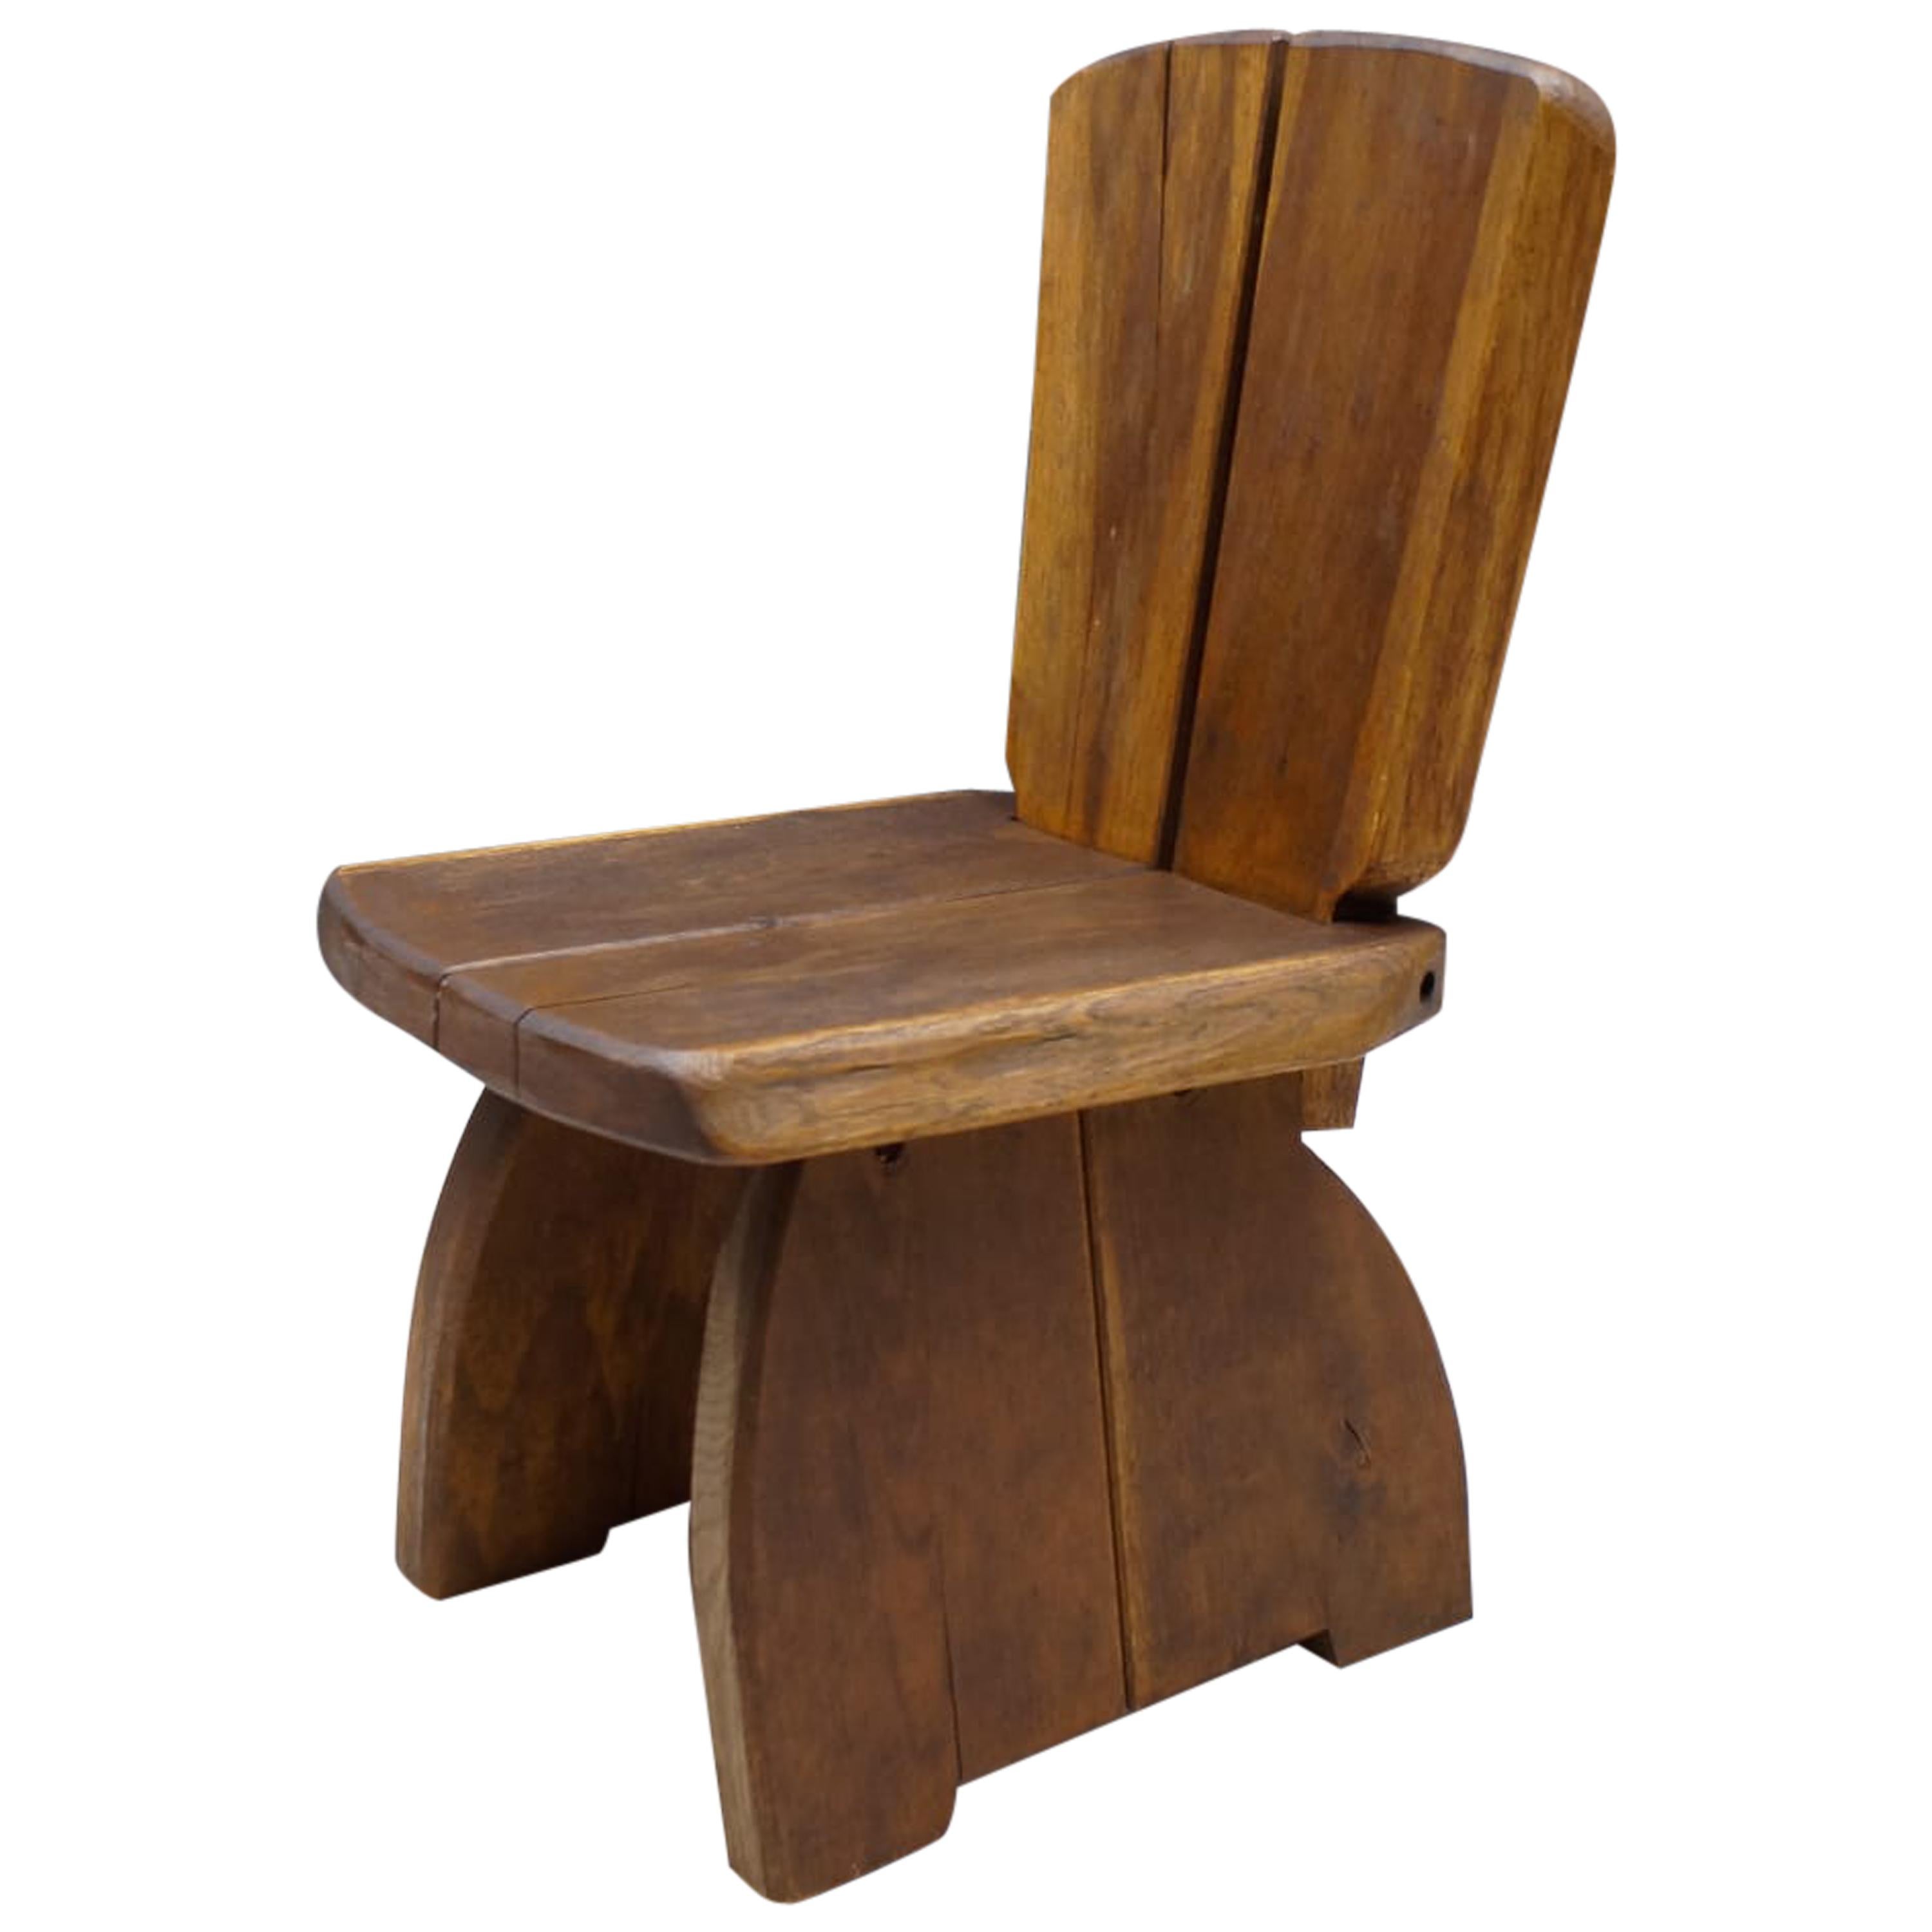 Französischer Prvincial-Stuhl aus Holz, 1960er Jahre